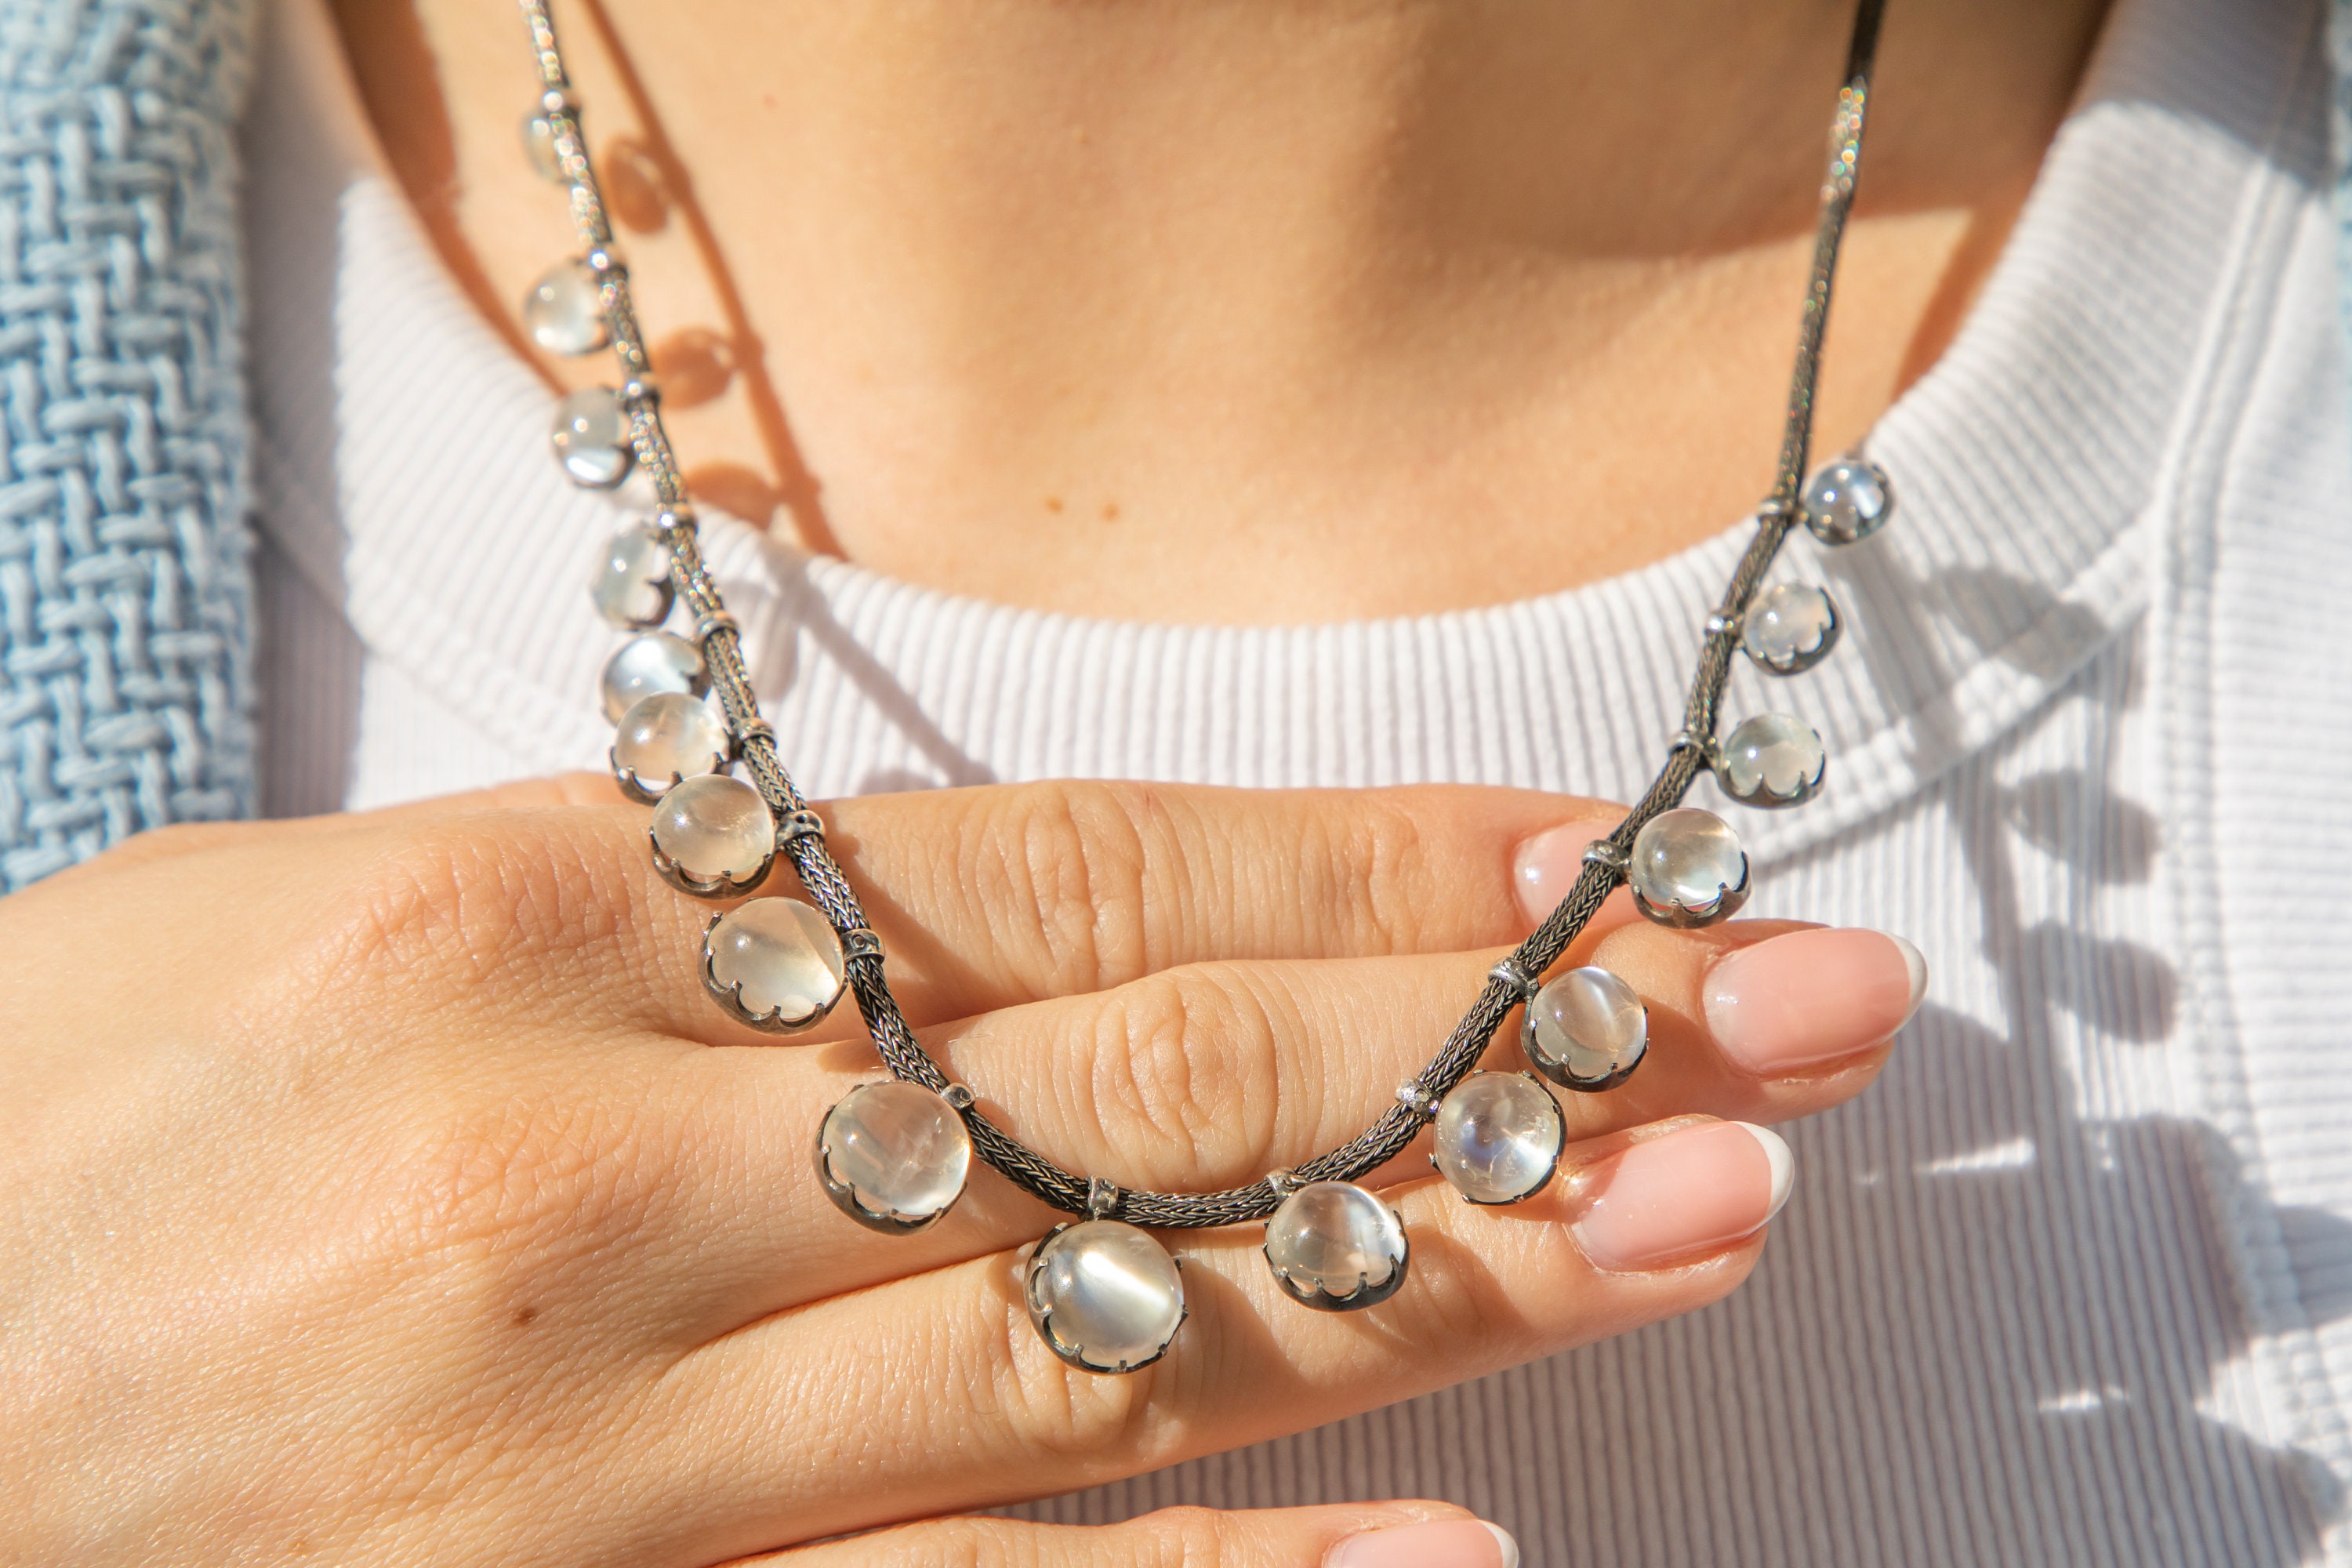 Necklace styles – lavalièr, négligée, and sautoir – navette jewellery